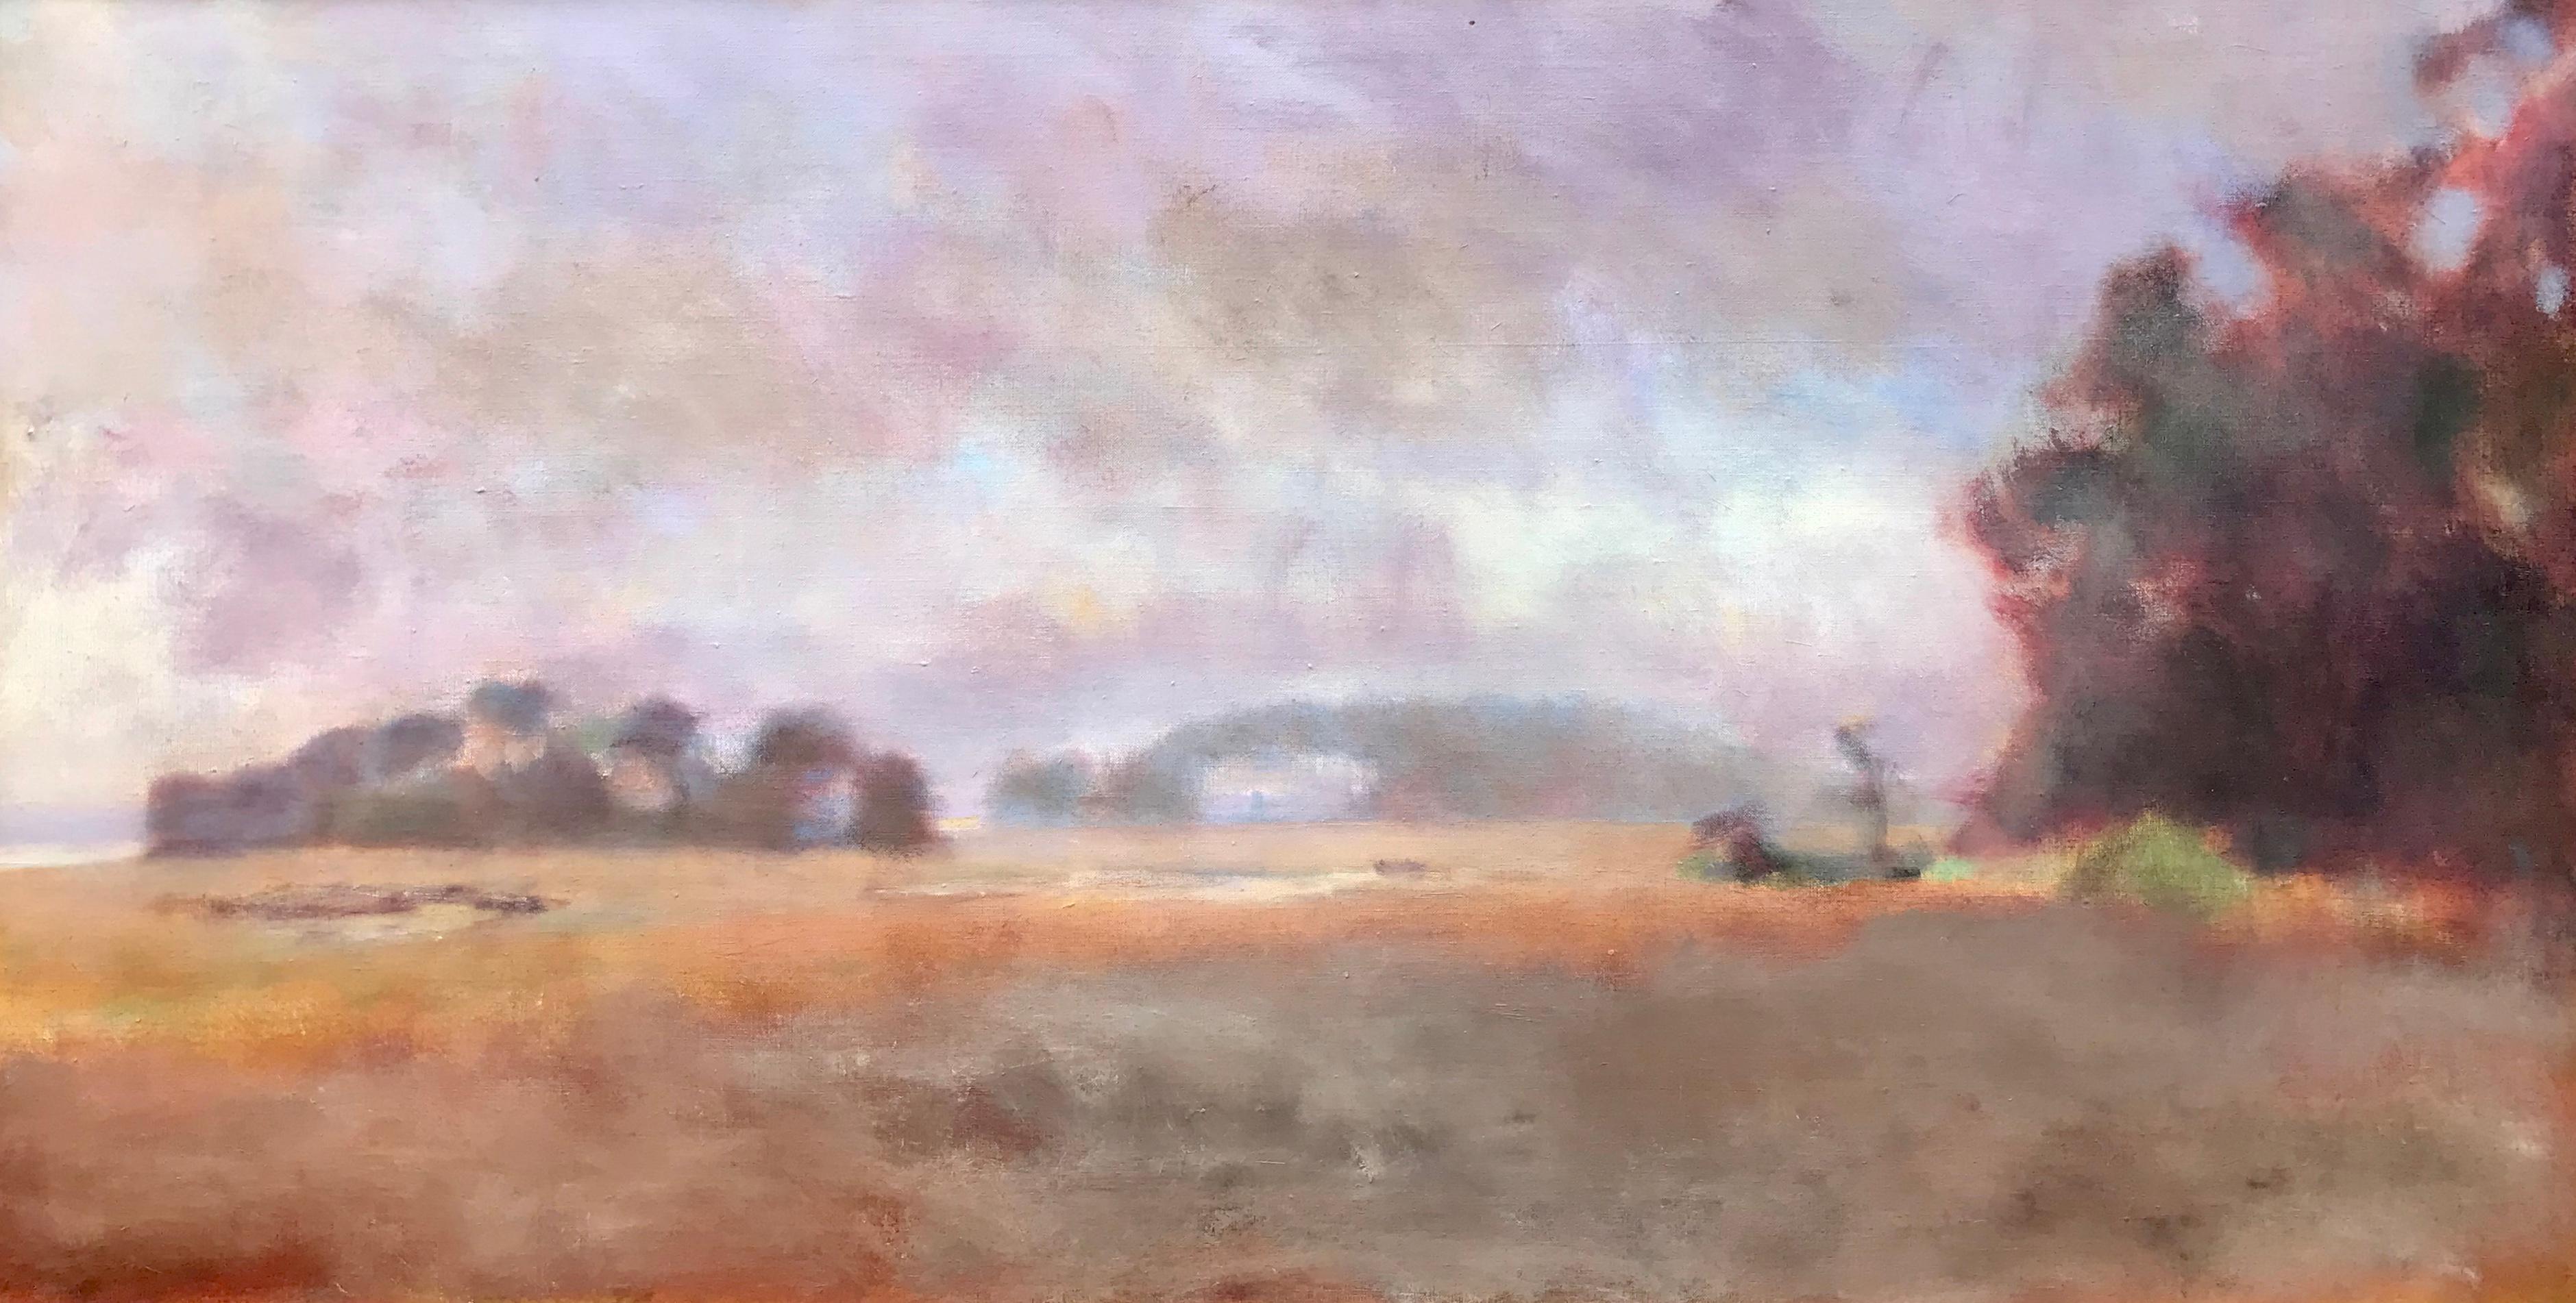 Larry Horowitz Landscape Painting – Regnerischer Sumpf